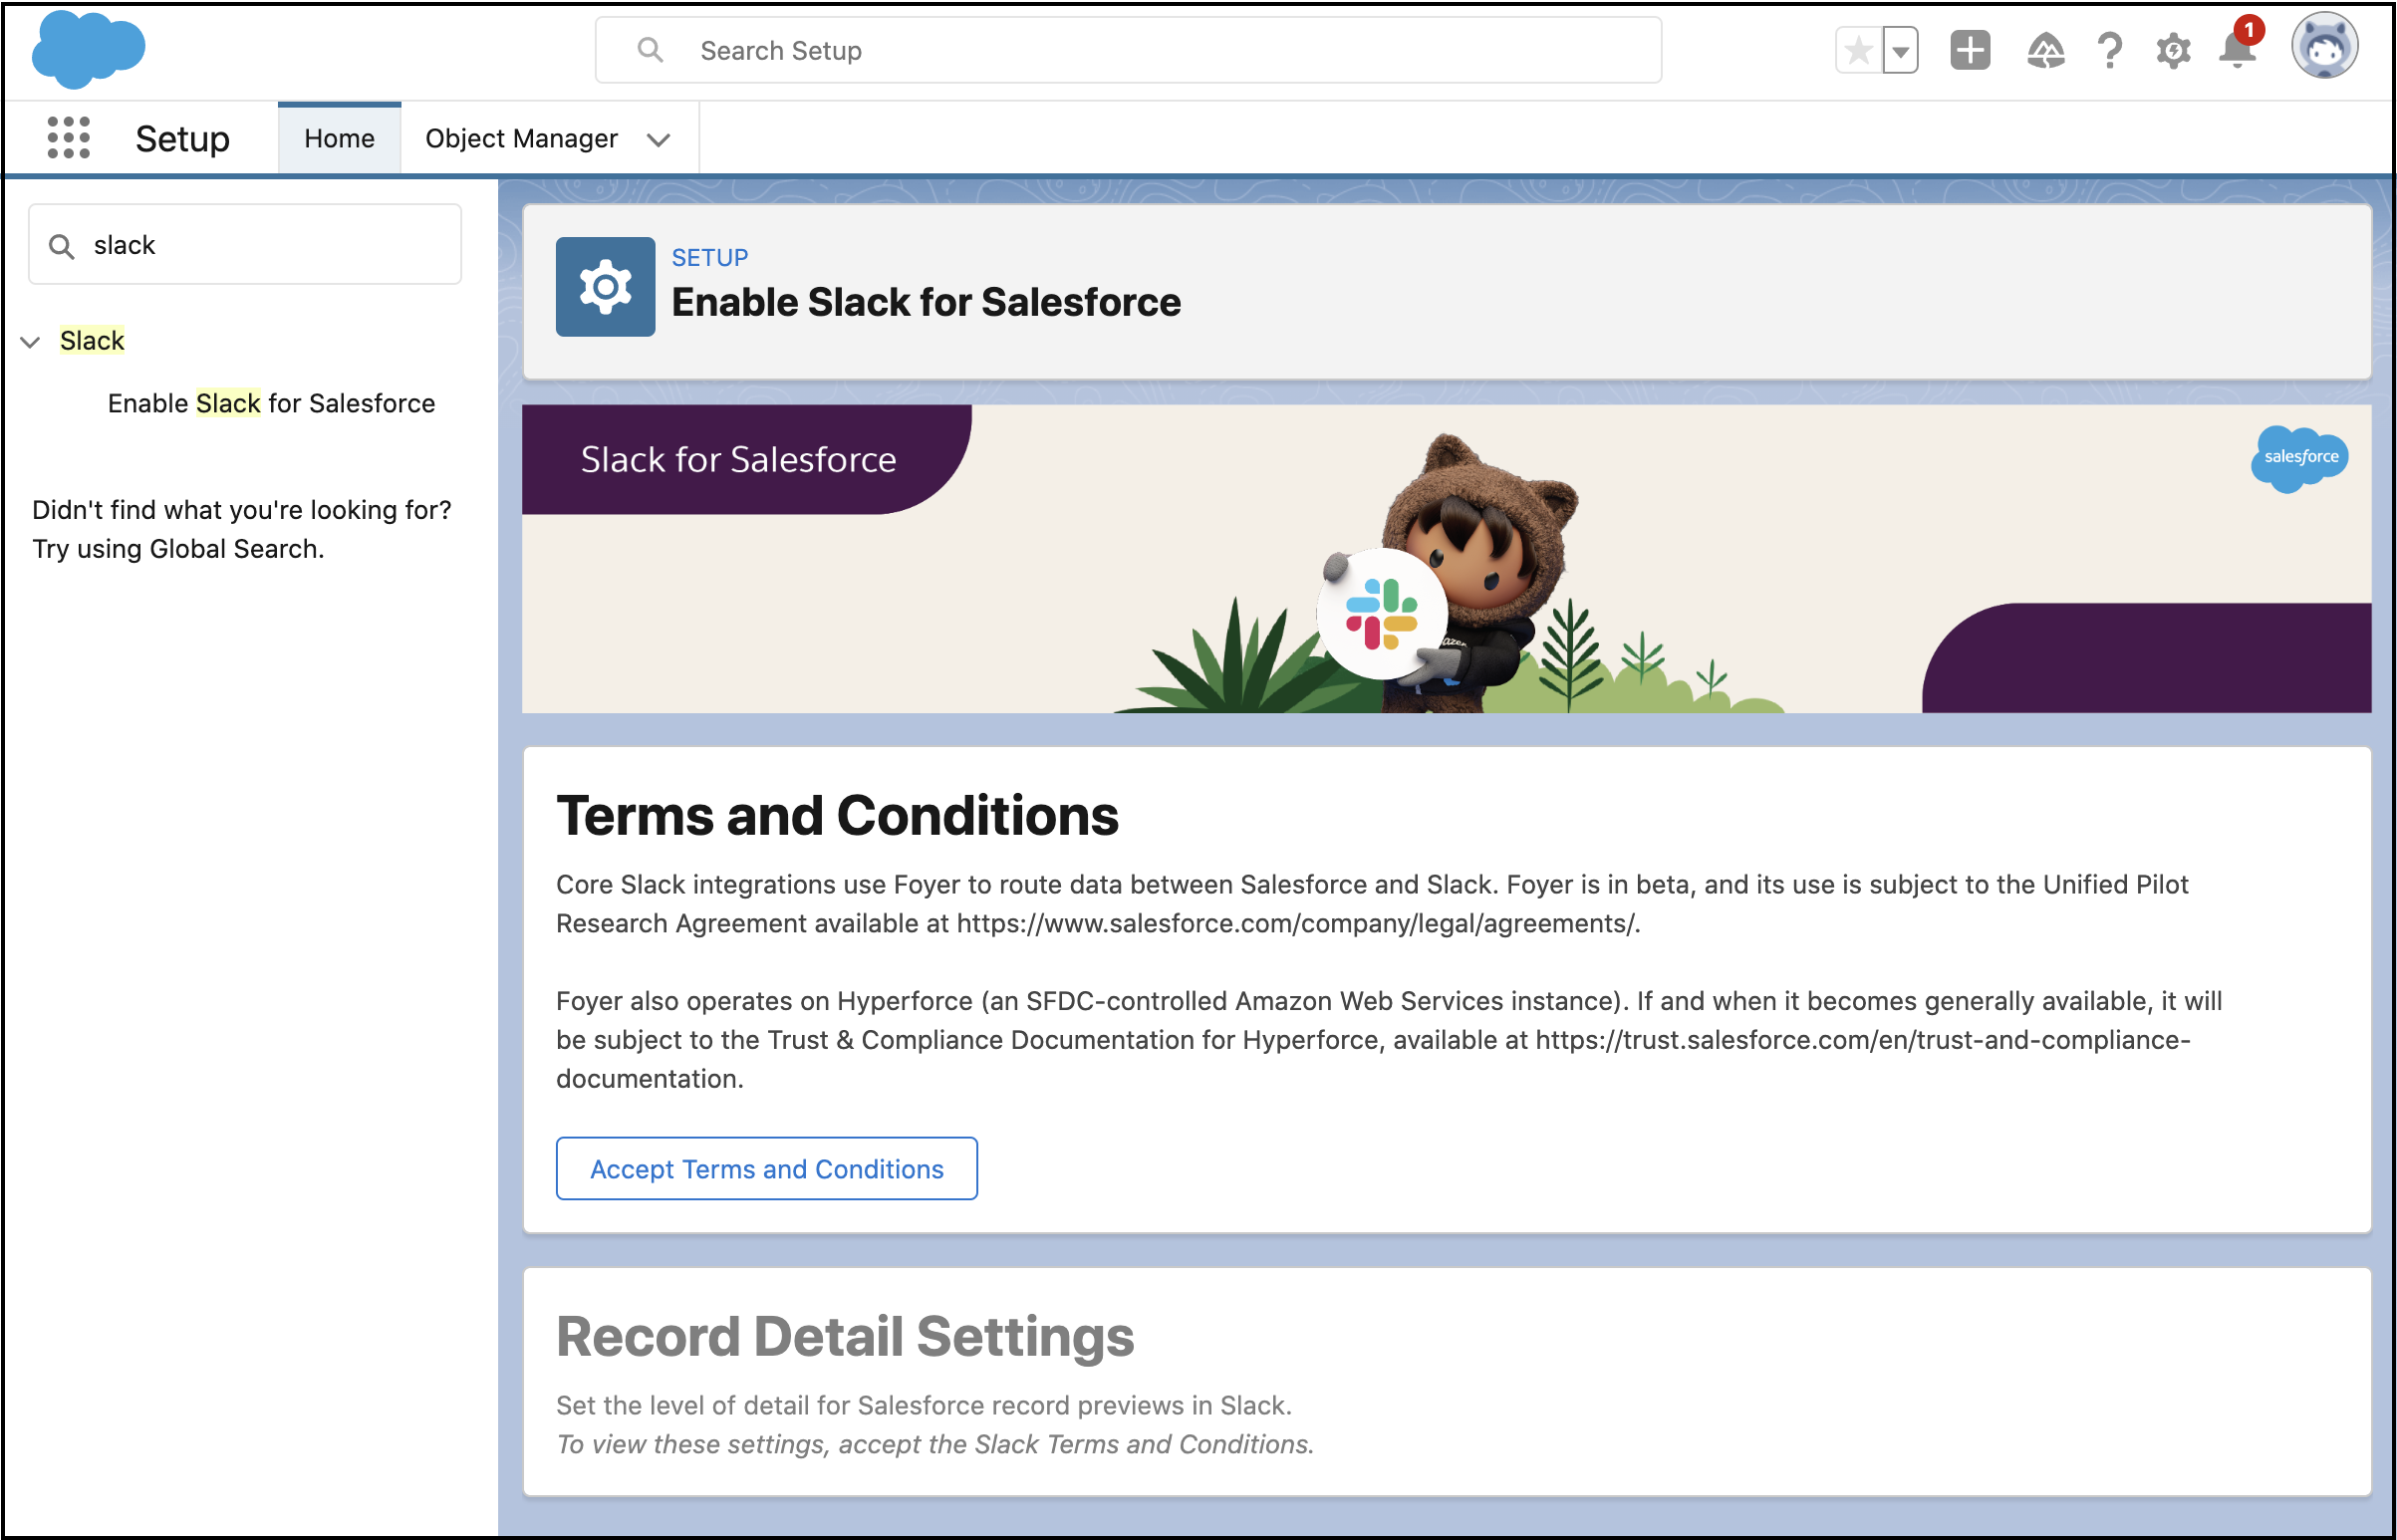 Enable Slack for Salesforce setup screen